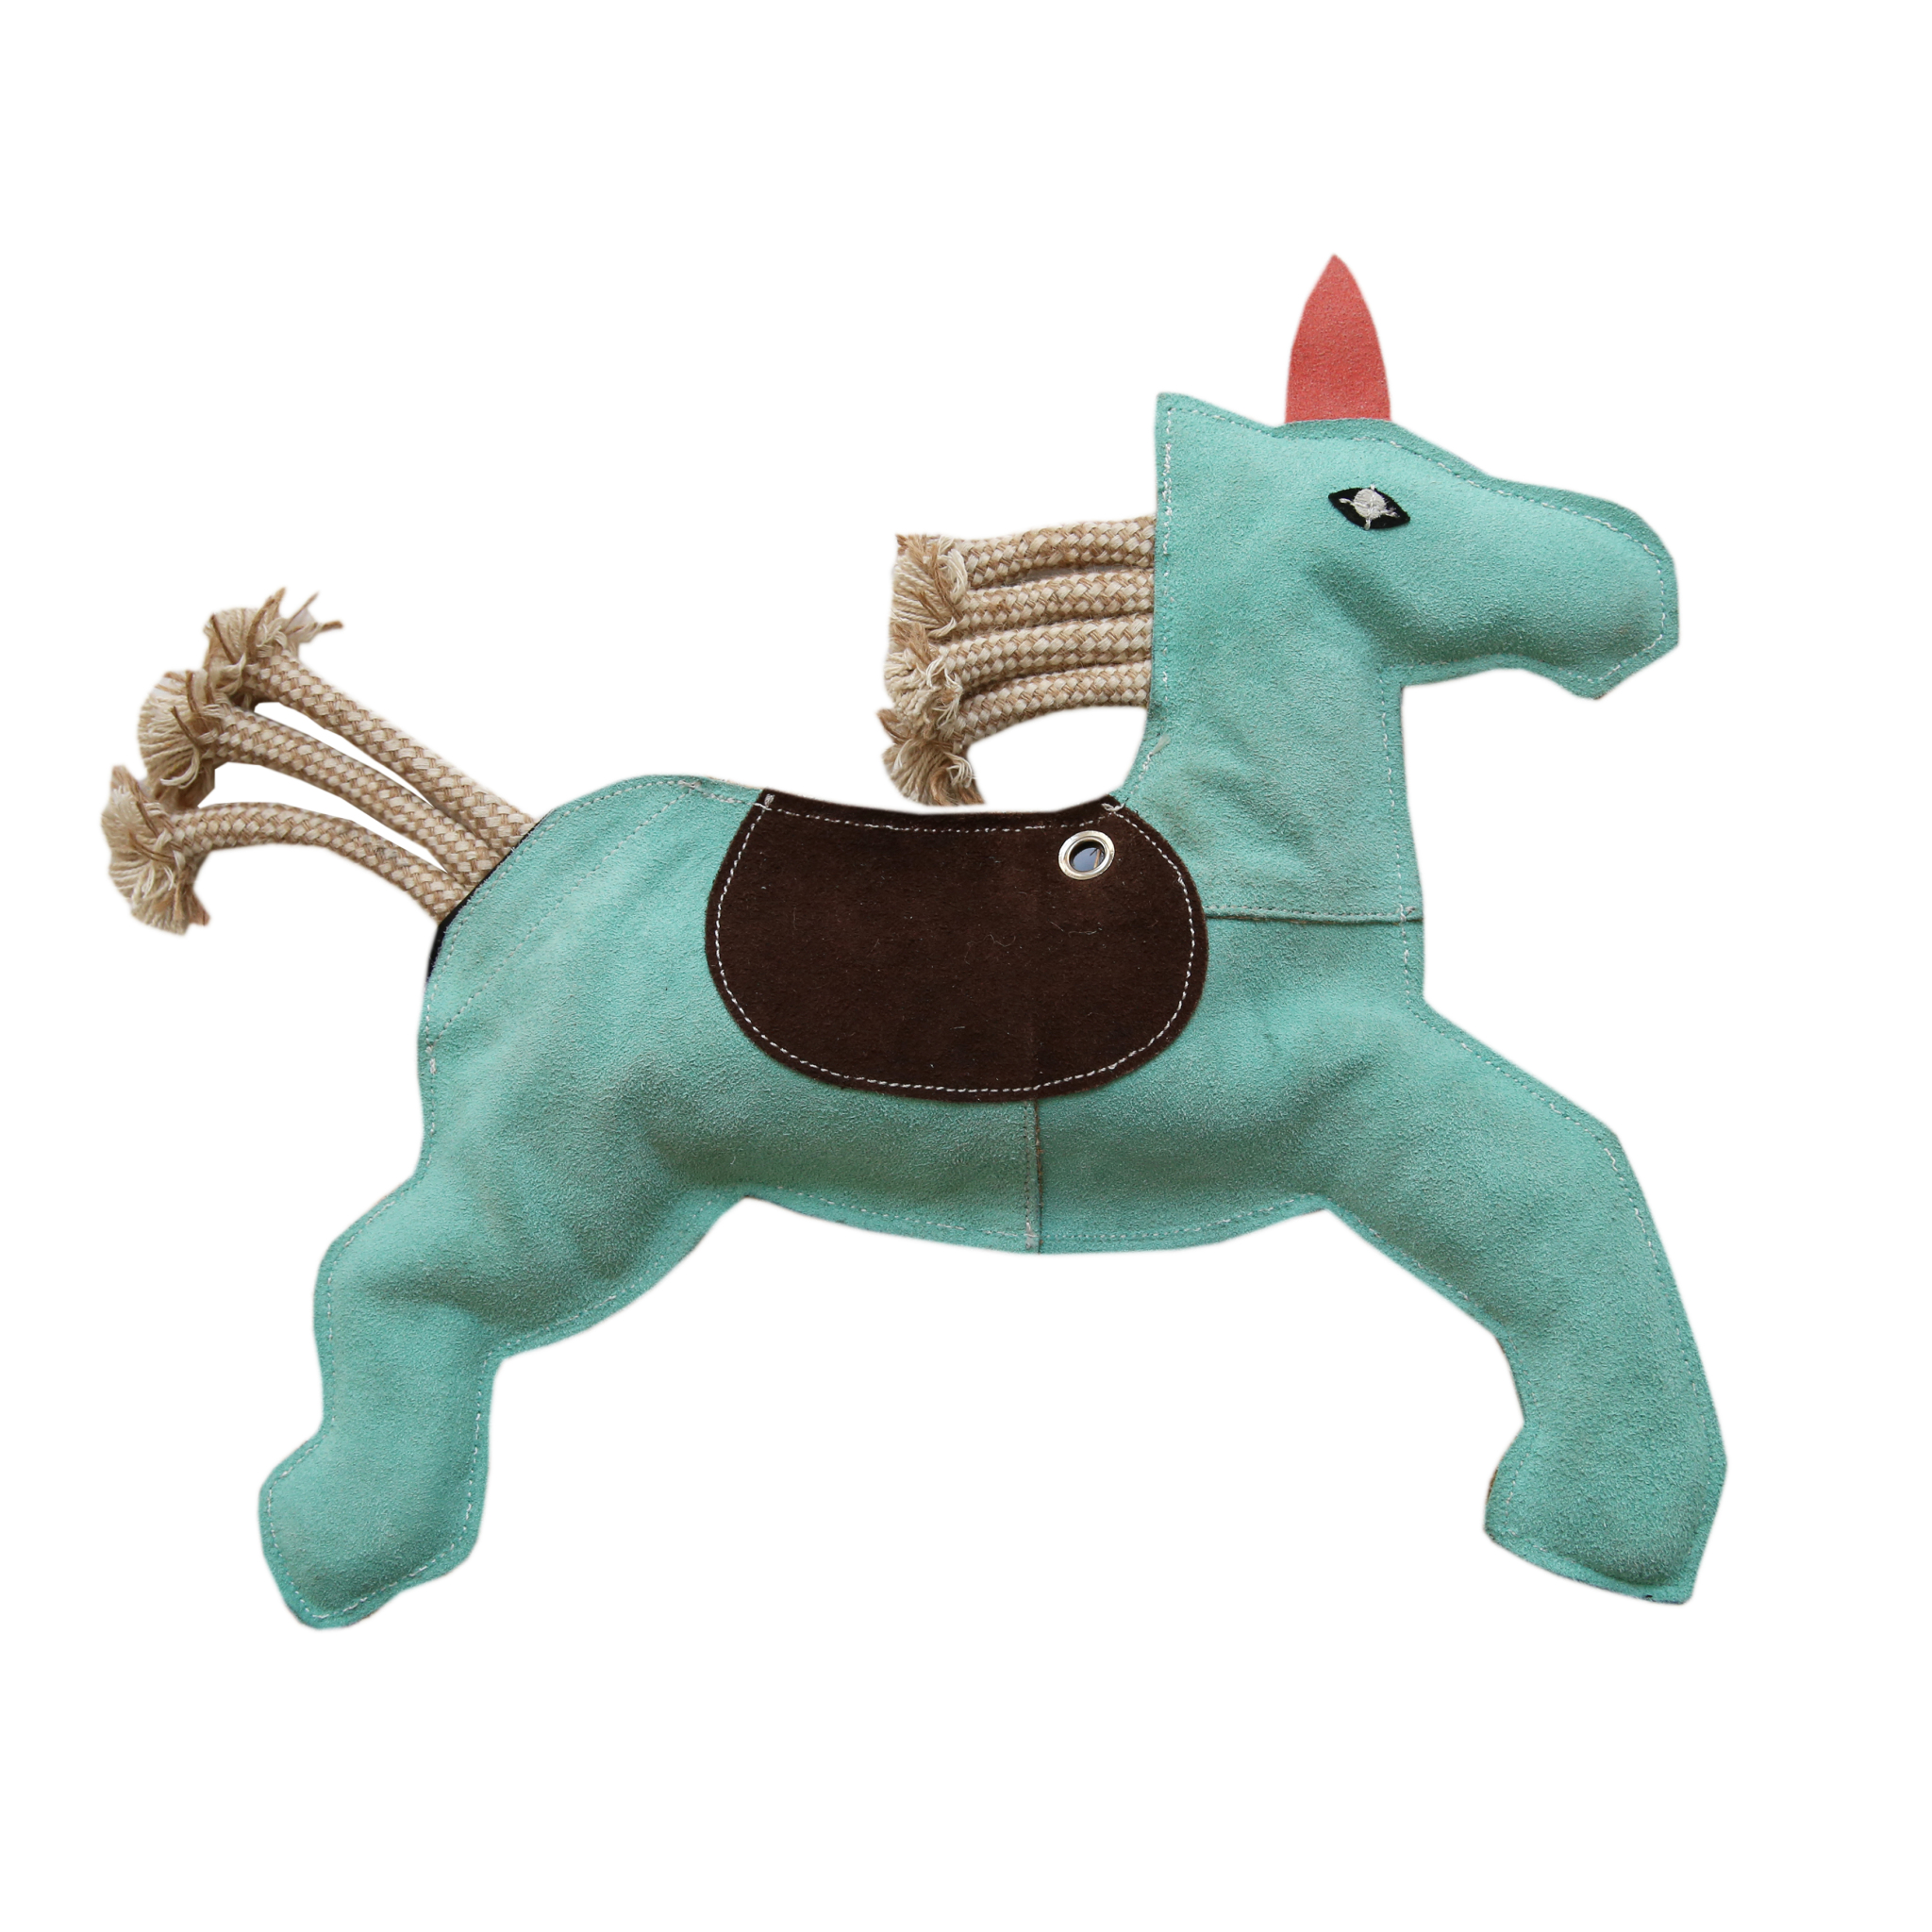 KENTUCKY Pferdespielzeug Relax Horse Toy Unicorn - türkis - Stck. - 1